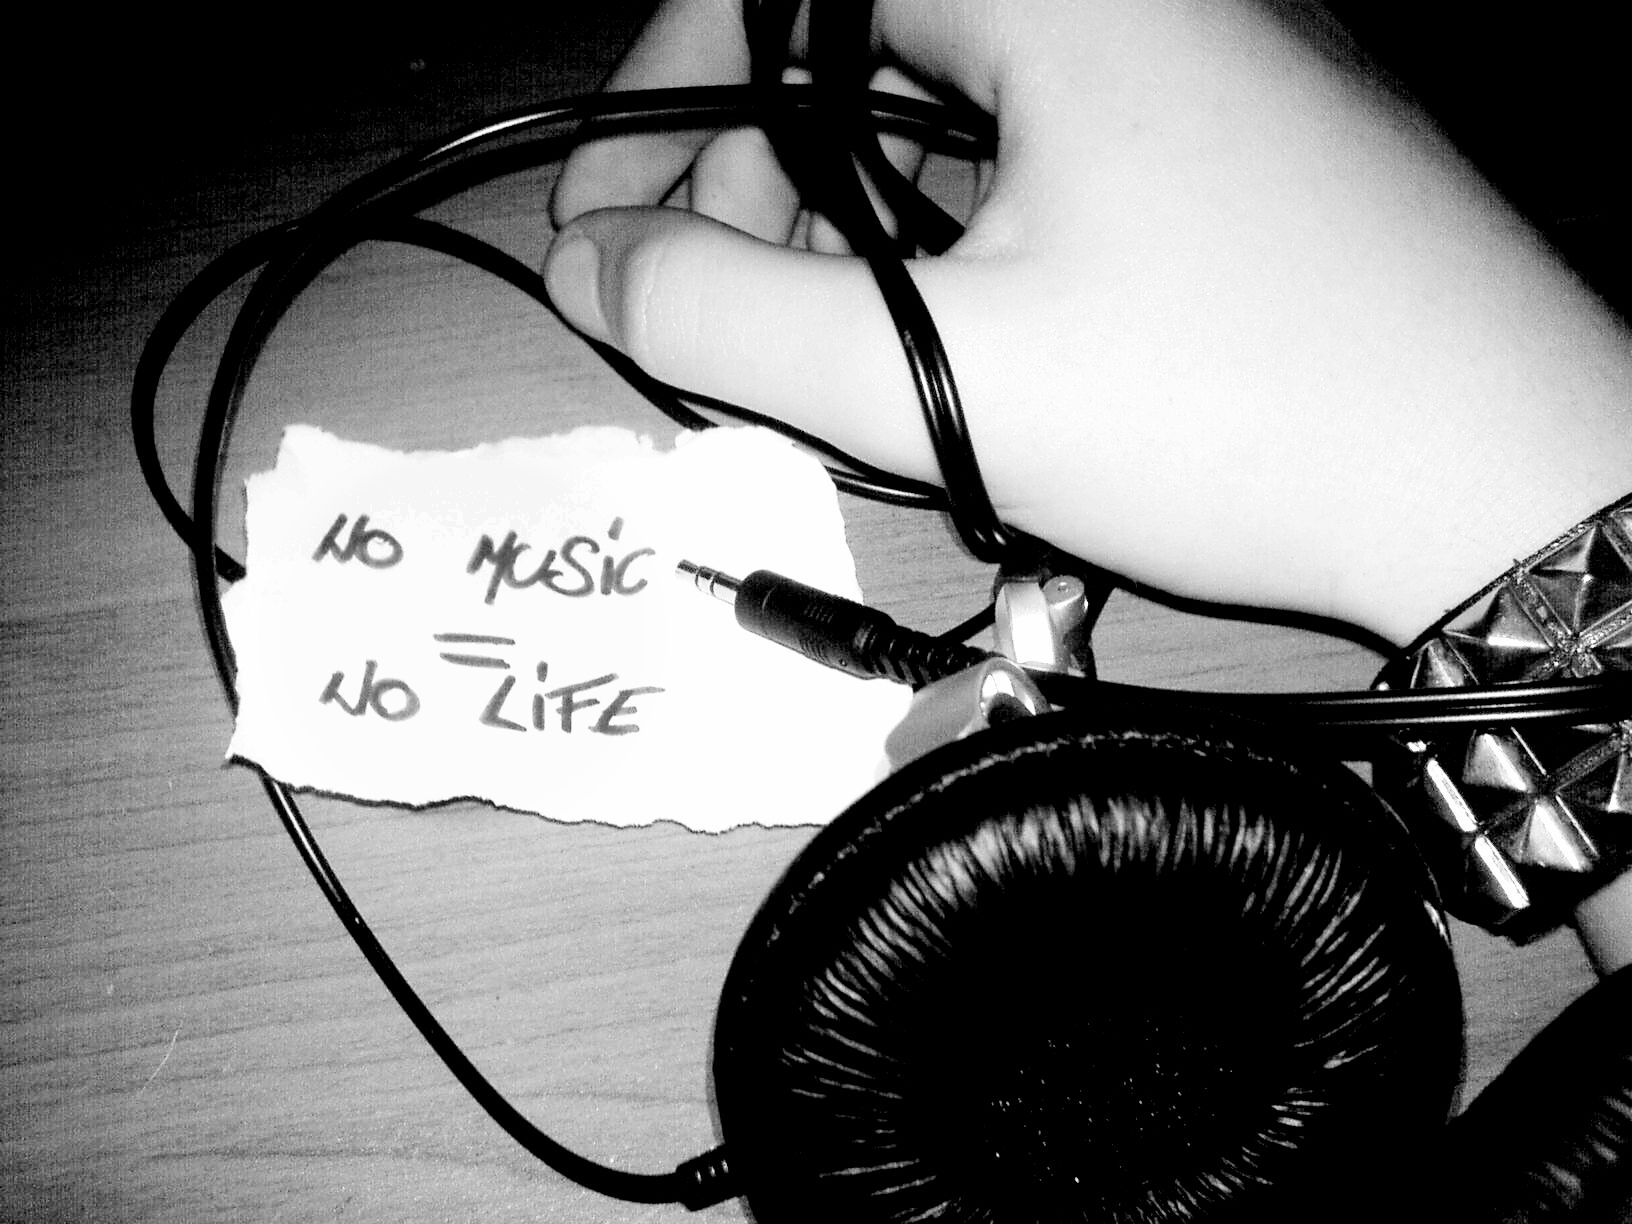 no_music__no_life_by_0silver0.jpg